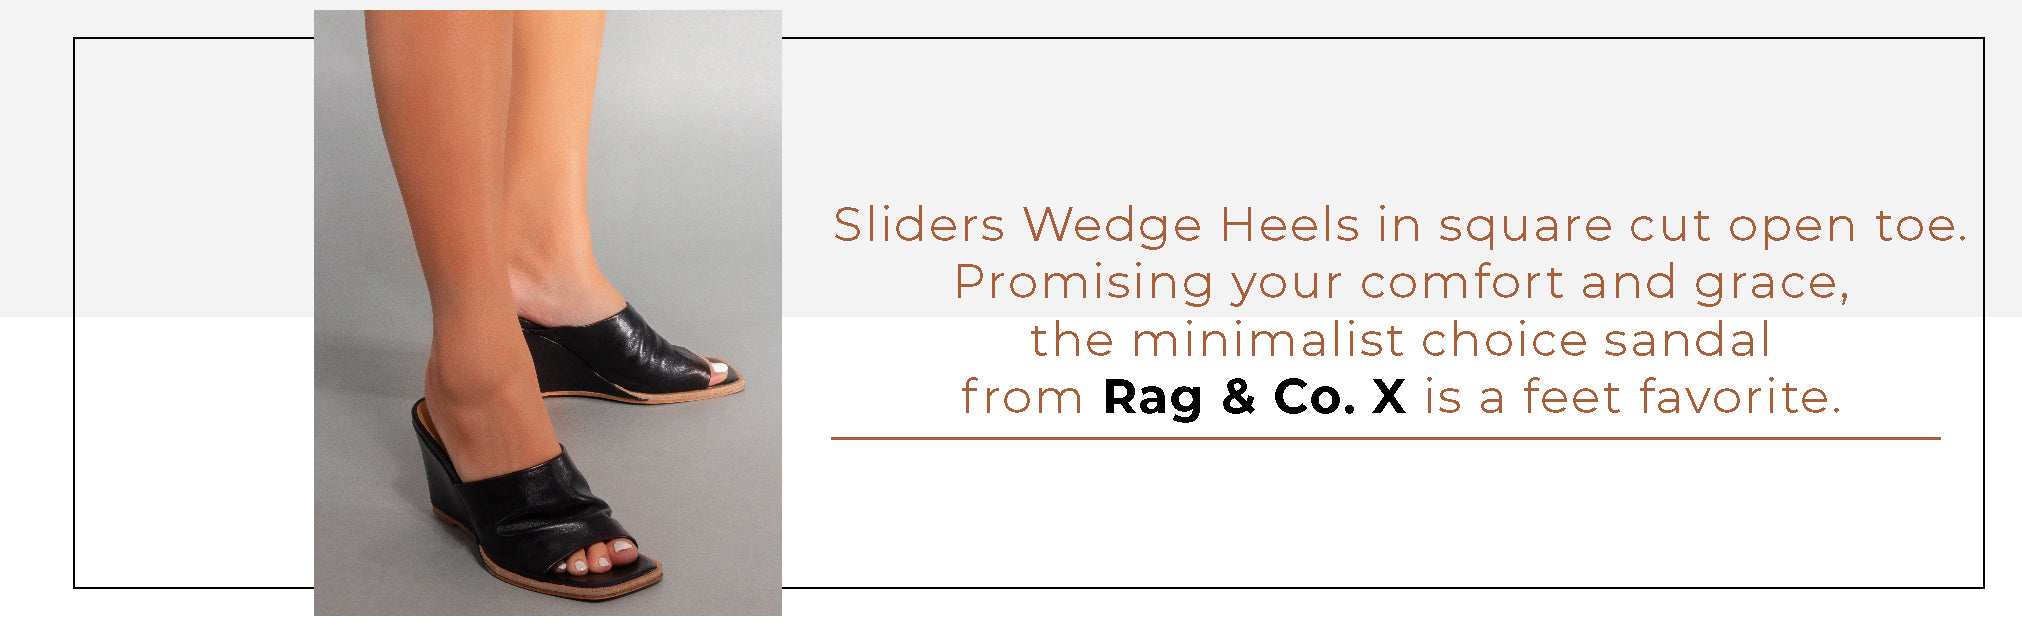 HEPBURN Tan Sliders Wedge Sandals